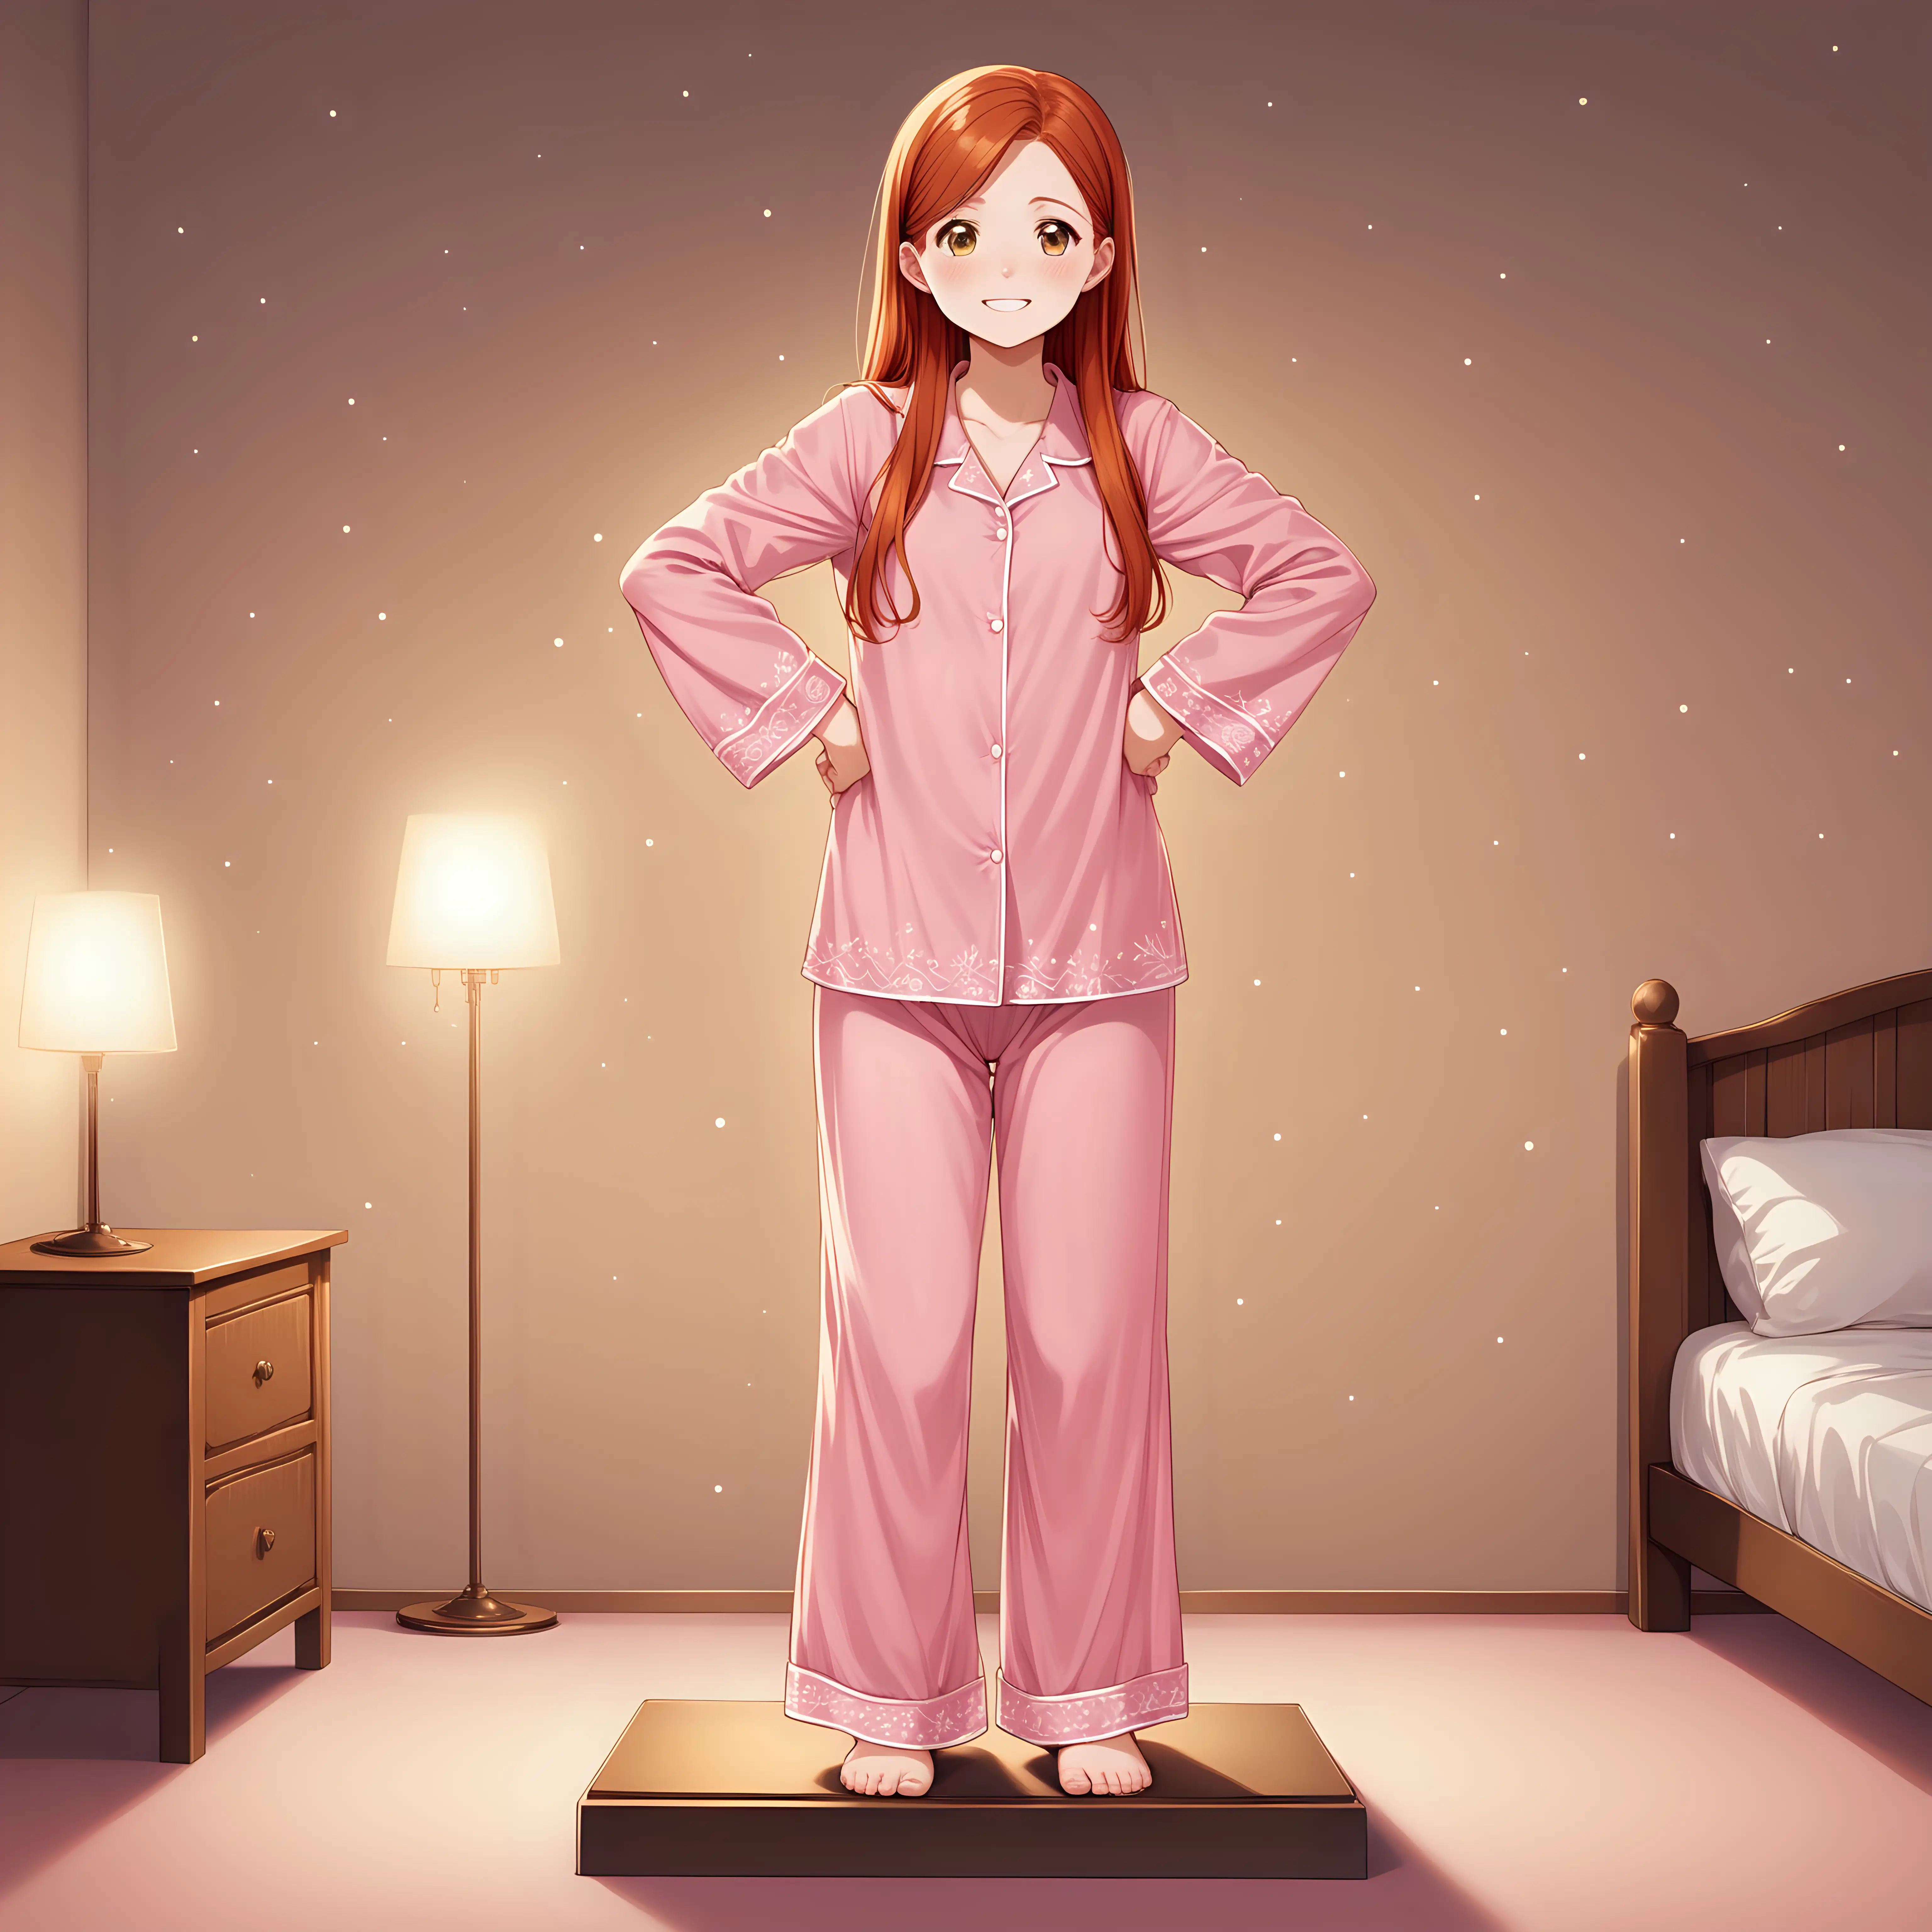 Enchanted Ginny Weasley Poses in Elegant Pink Pajamas